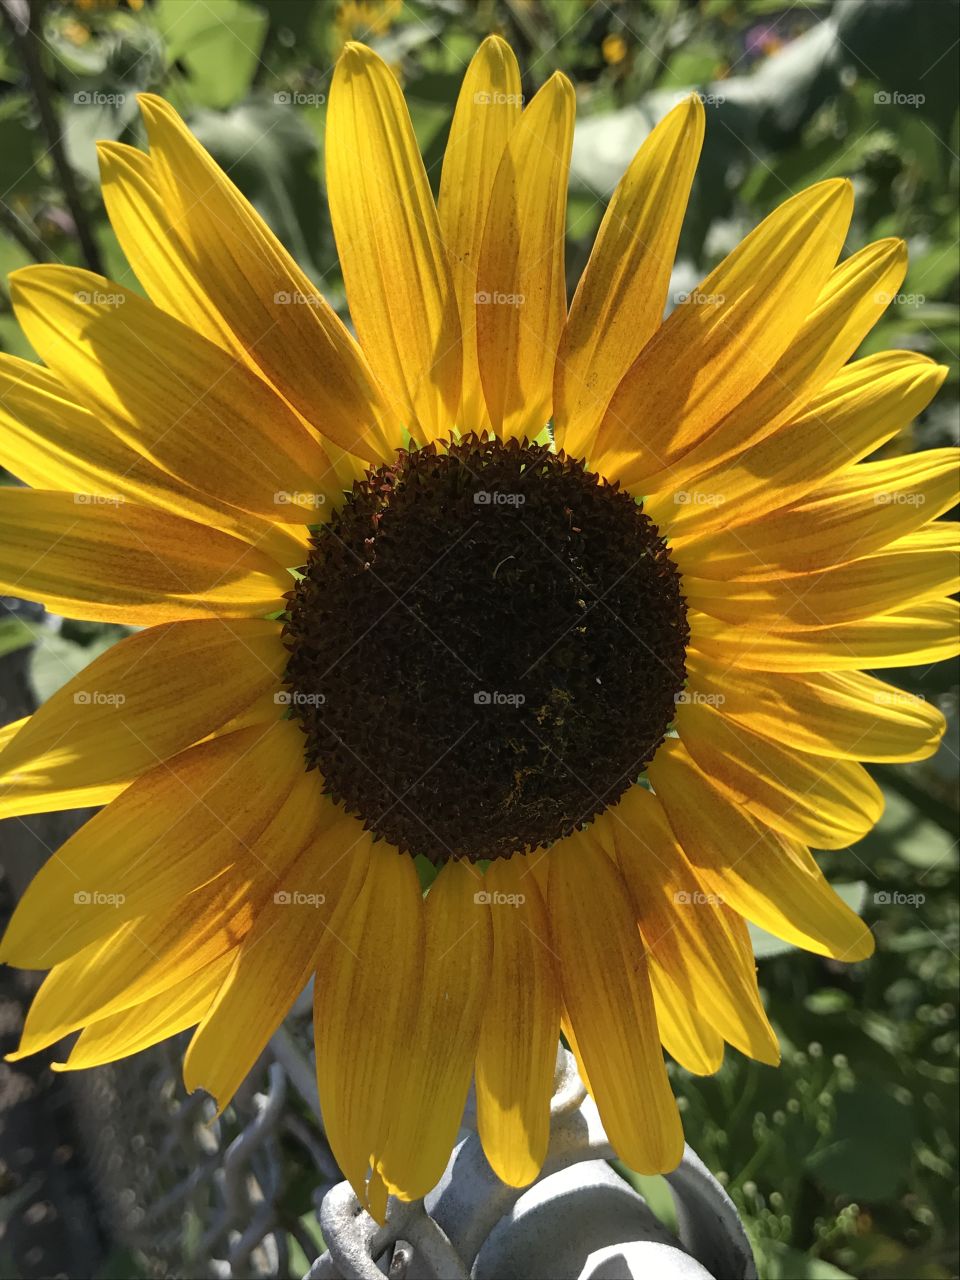 Sunflower, bright yellow up close 